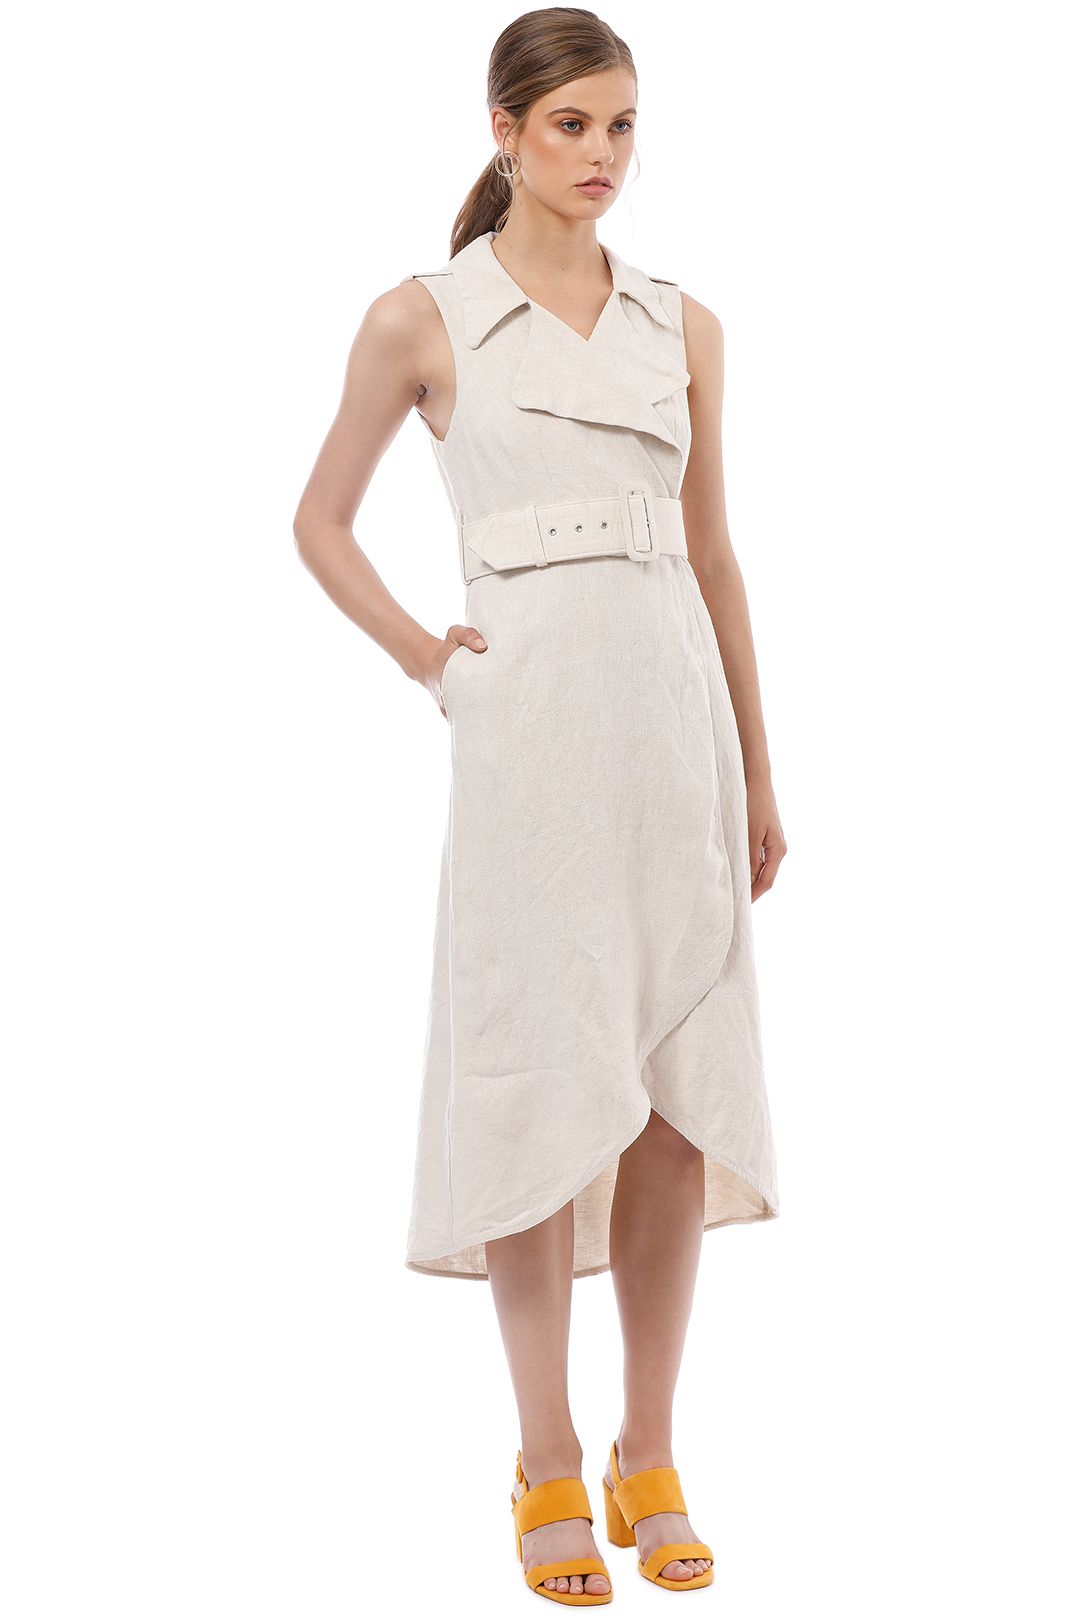 Shona Joy - Atticus Linen Sleeveless Trench Midi Dress - Cream - Side